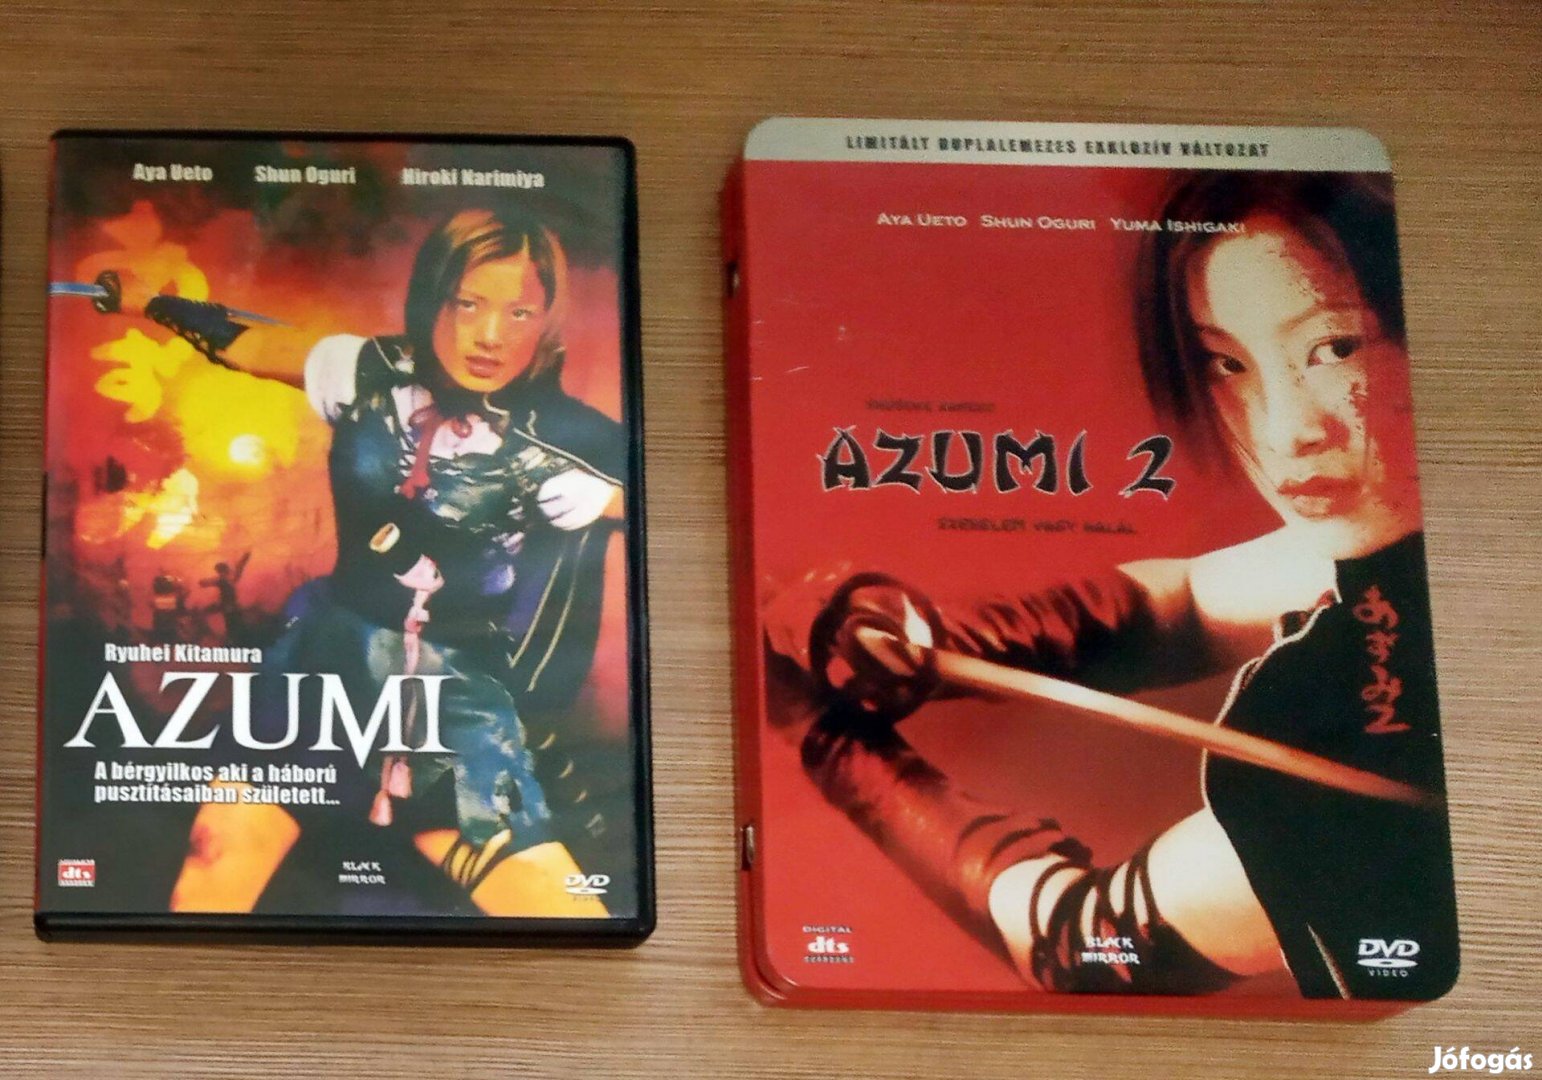 Keleti harci film ritkaságok DVD-n (Azumi 1, Azumi 2 fém díszdobozos k